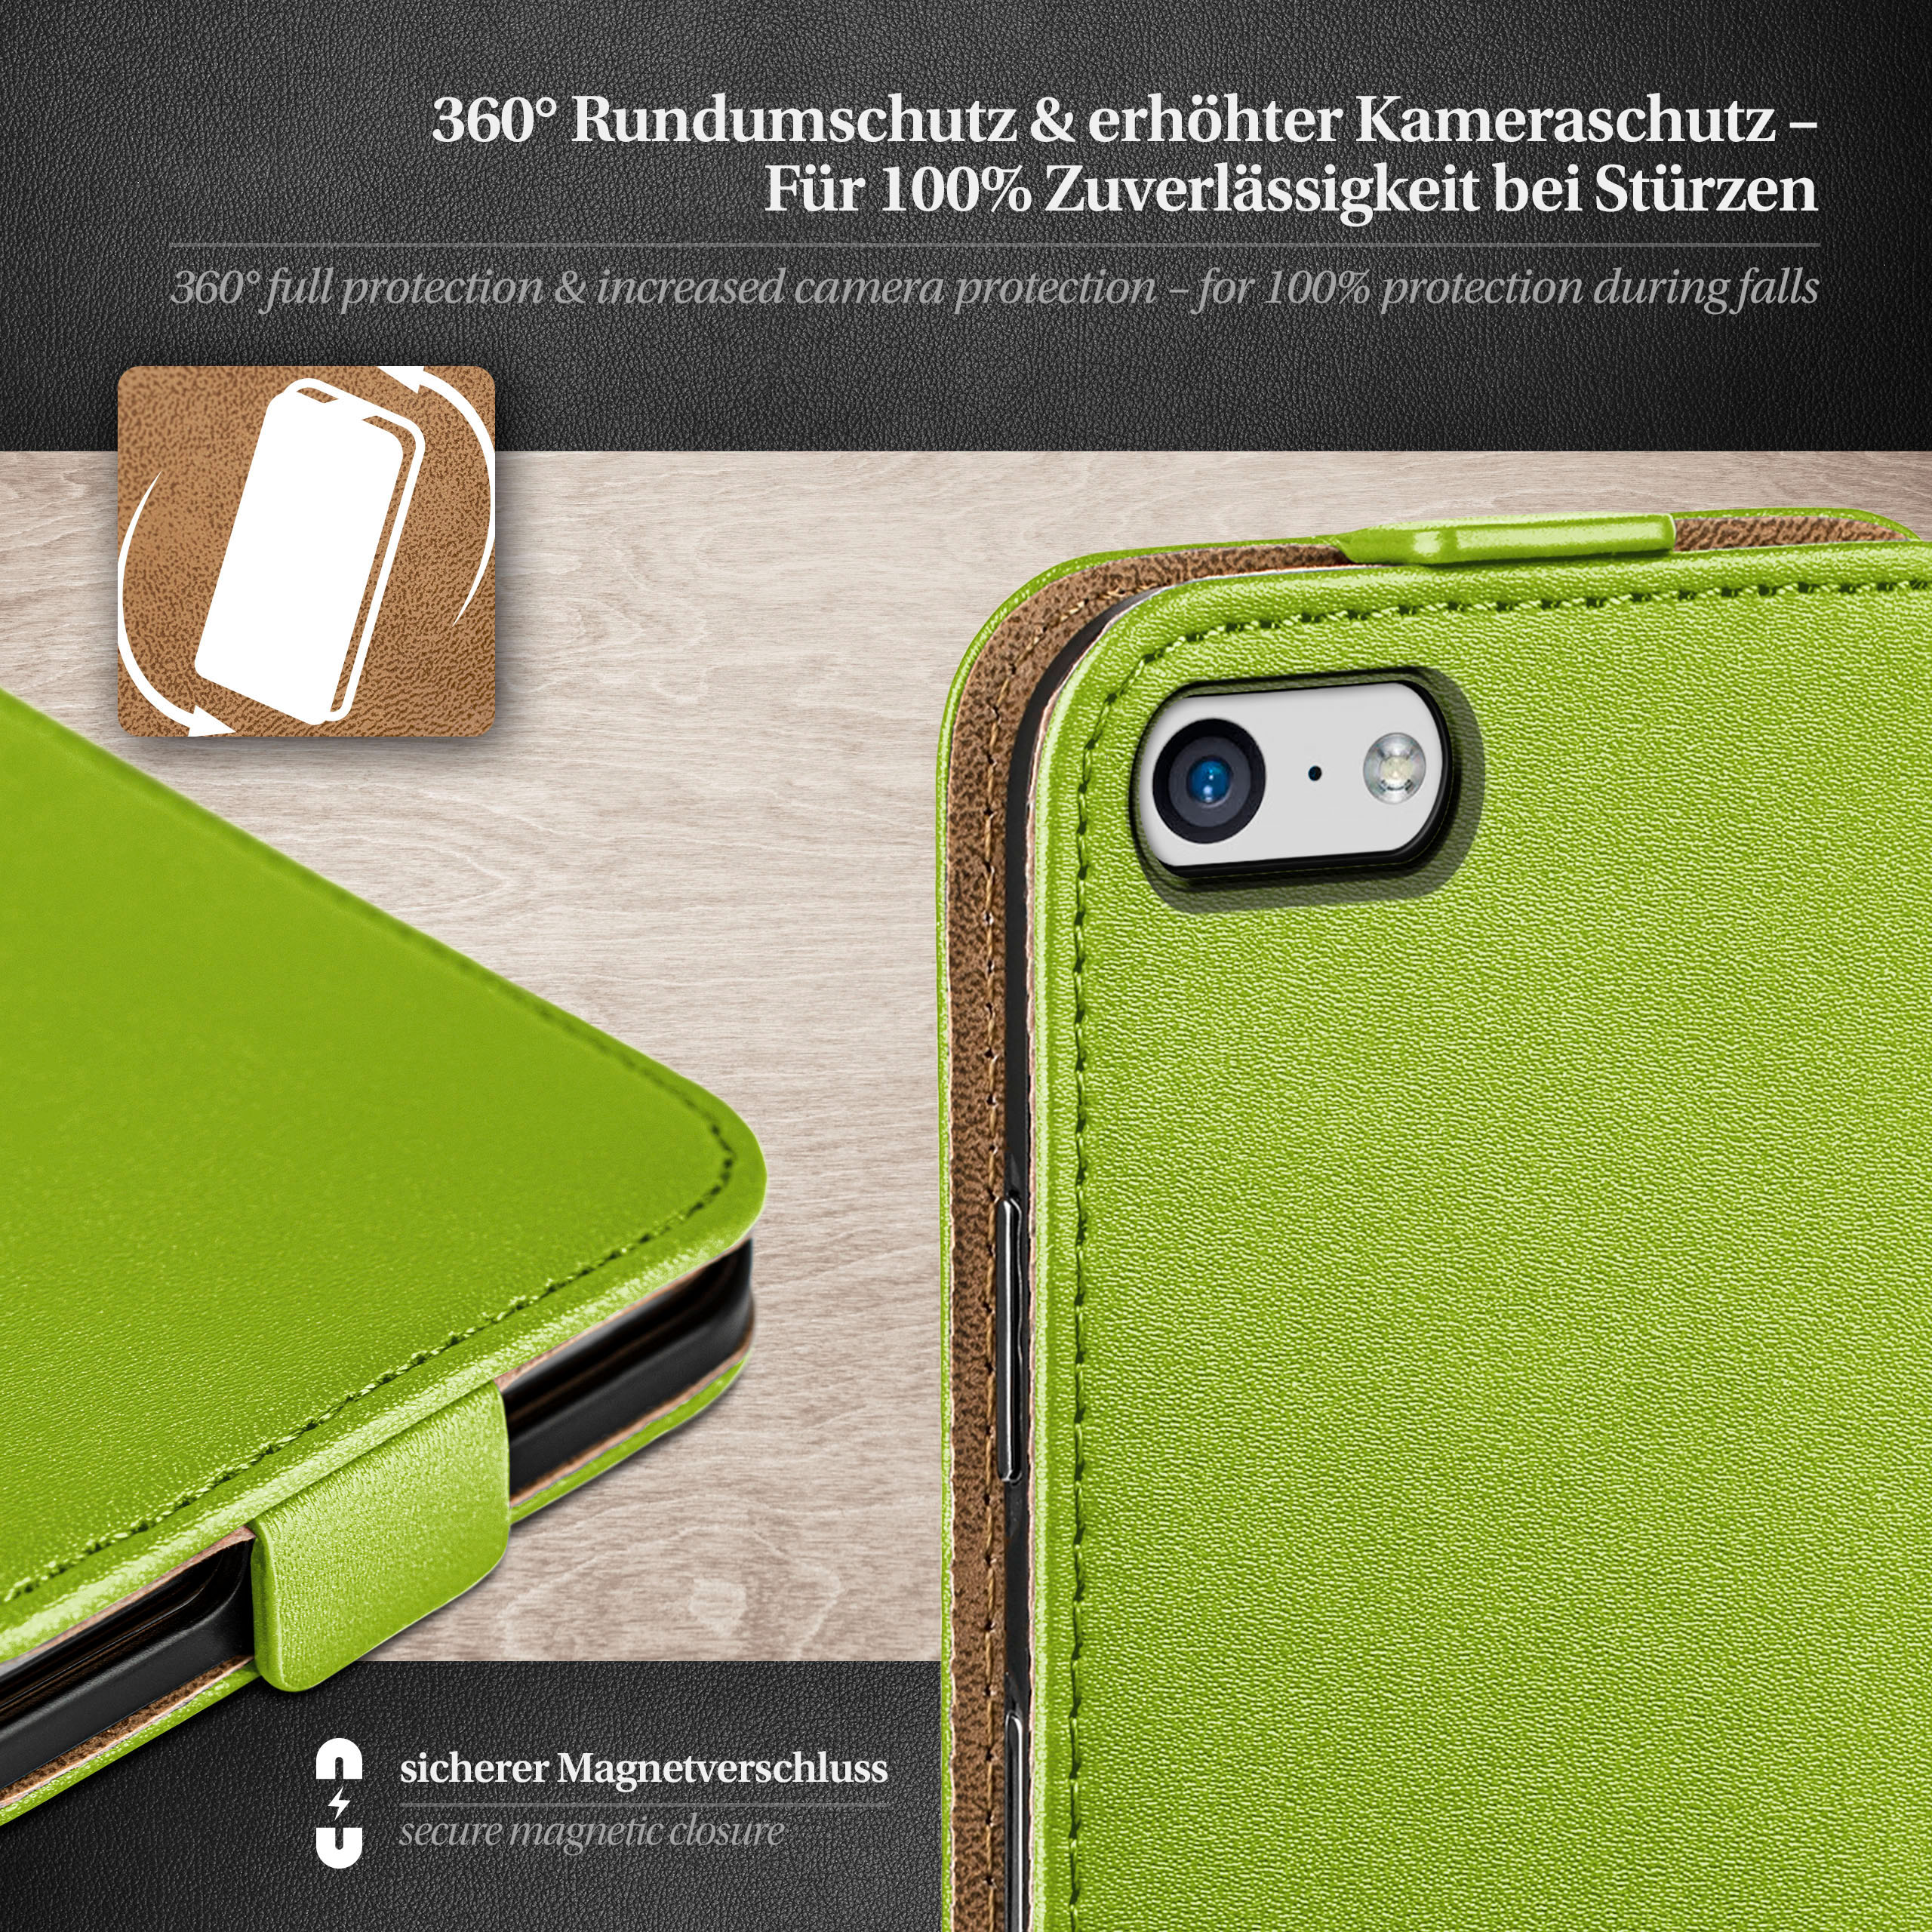 Apple, iPhone 5c, Cover, Flip MOEX Case, Flip Lime-Green